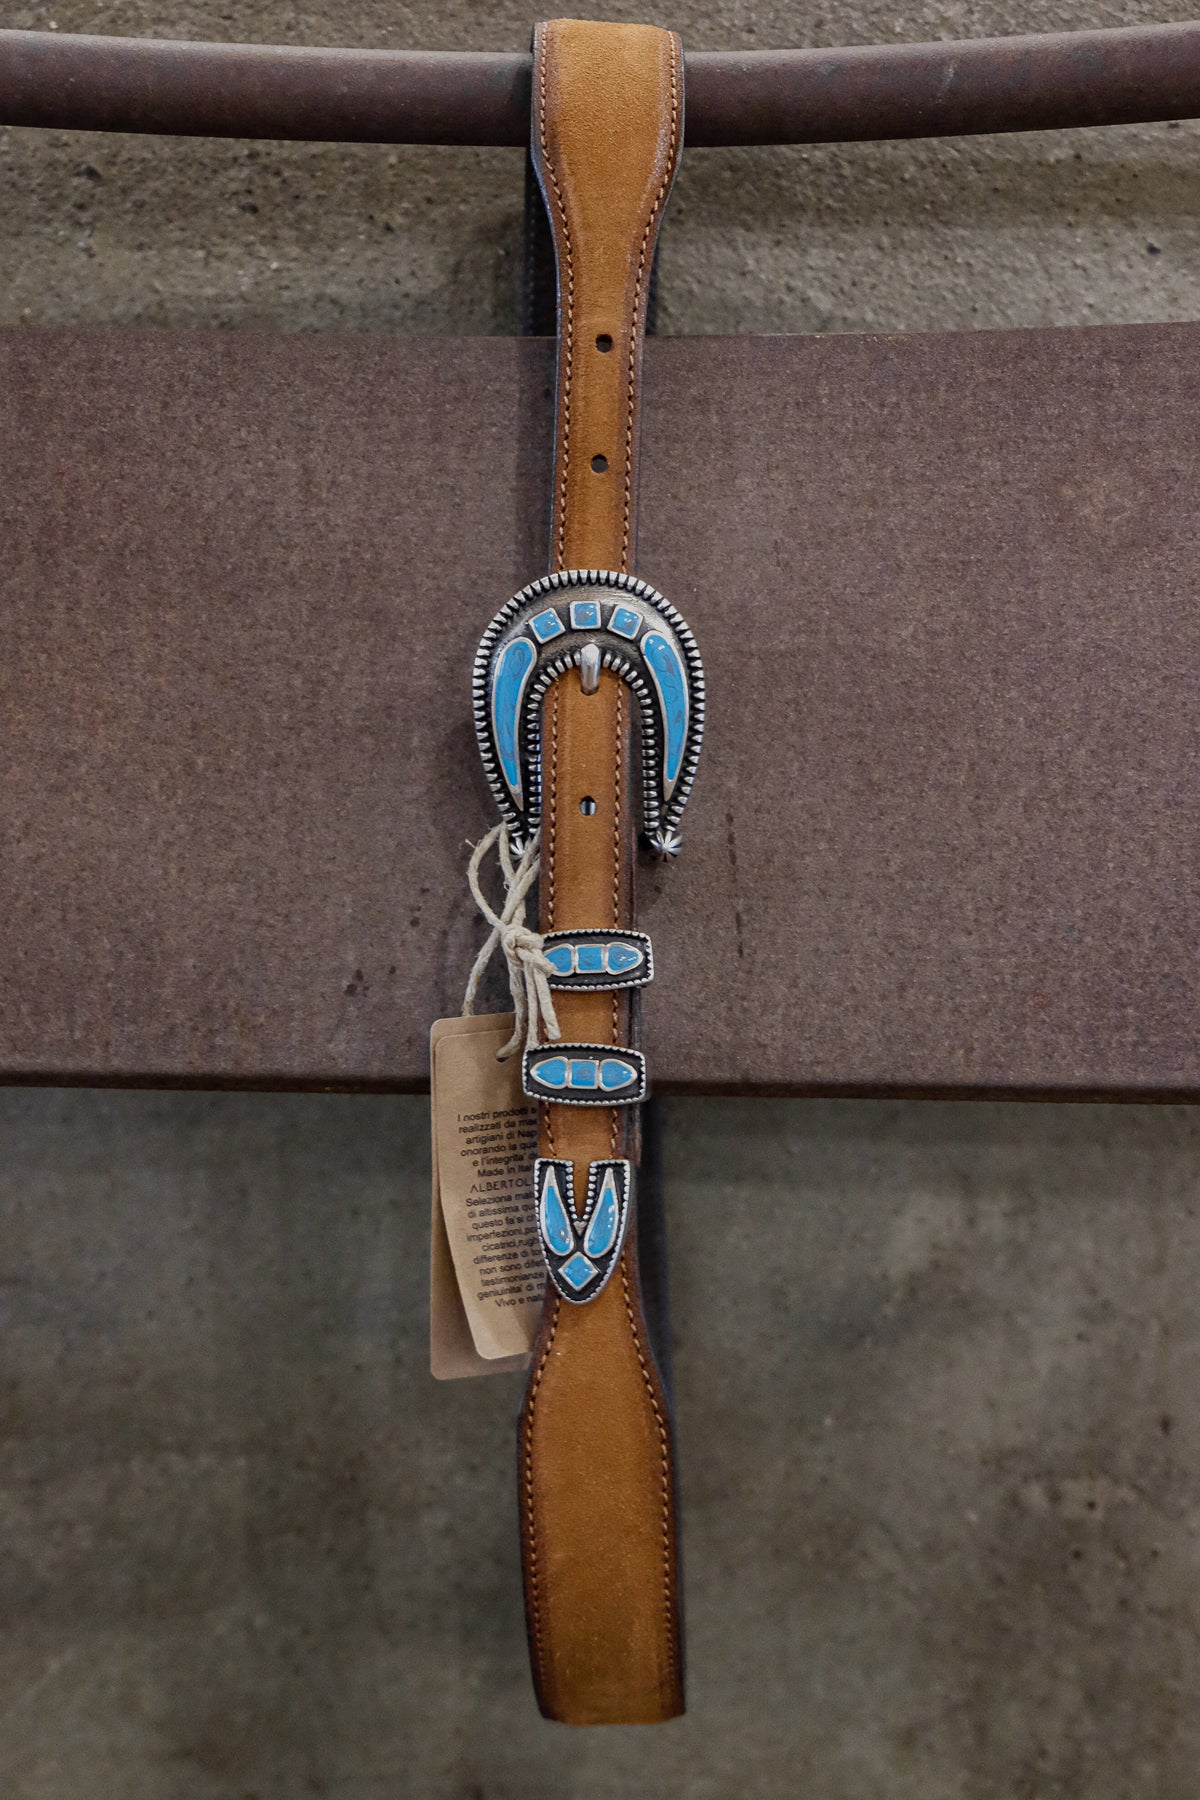 Alberto Luti - Turquoise Jewel Buckle Leather Belt in vintage suede